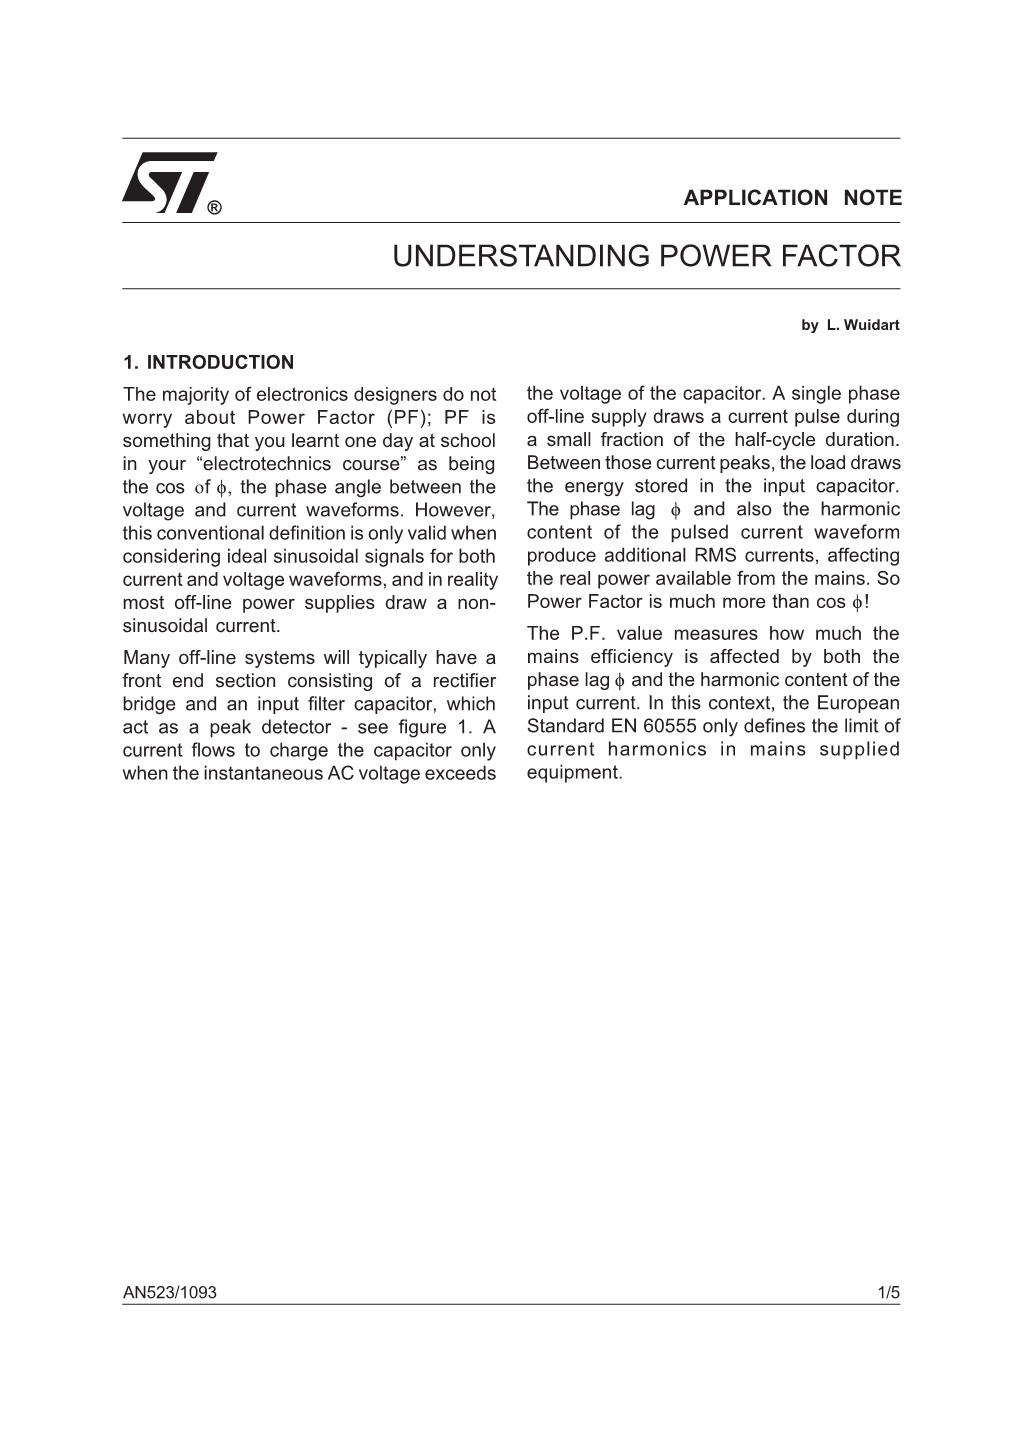 Understanding Power Factor by L Wuidart